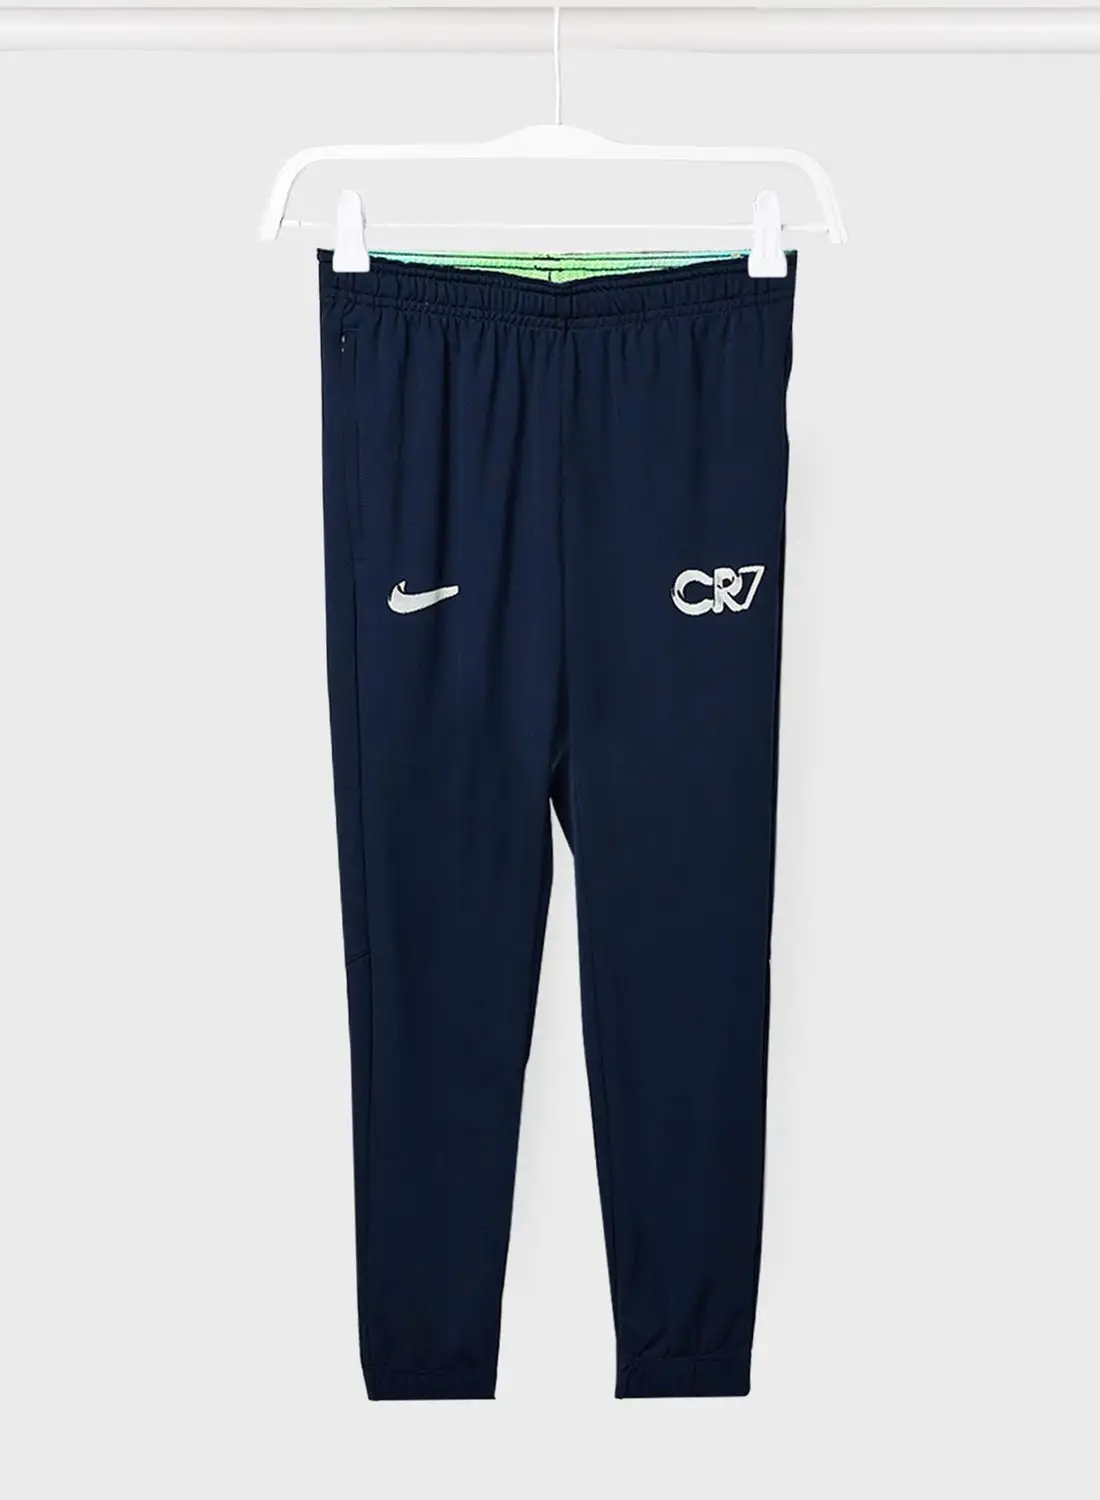 Nike Youth Cr7 Dri-Fit Sweatpants